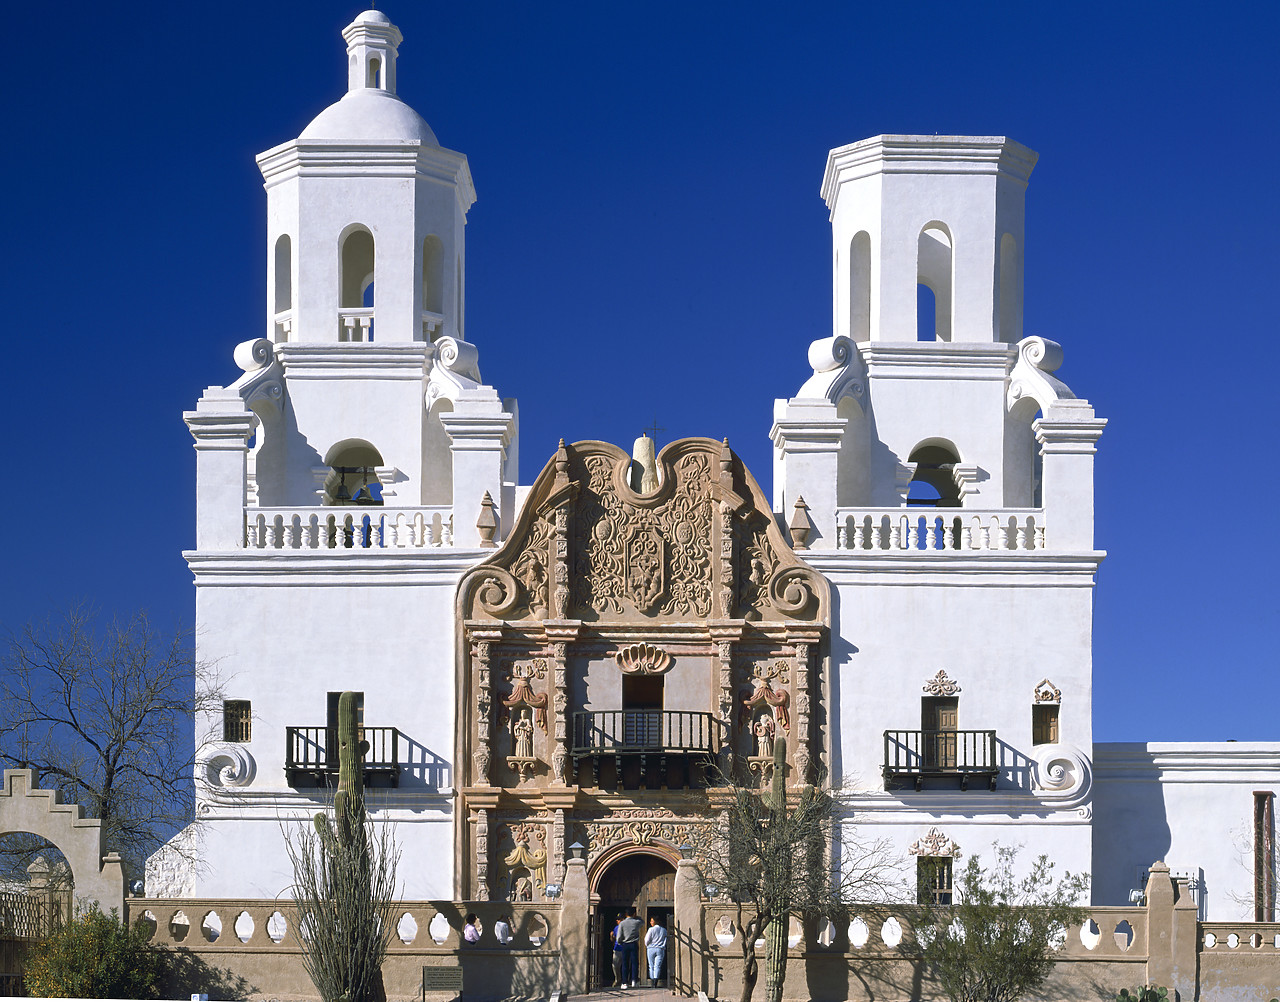 #891961-1 - Mission San Xavier del Bac, near Tucson, Arizona, USA